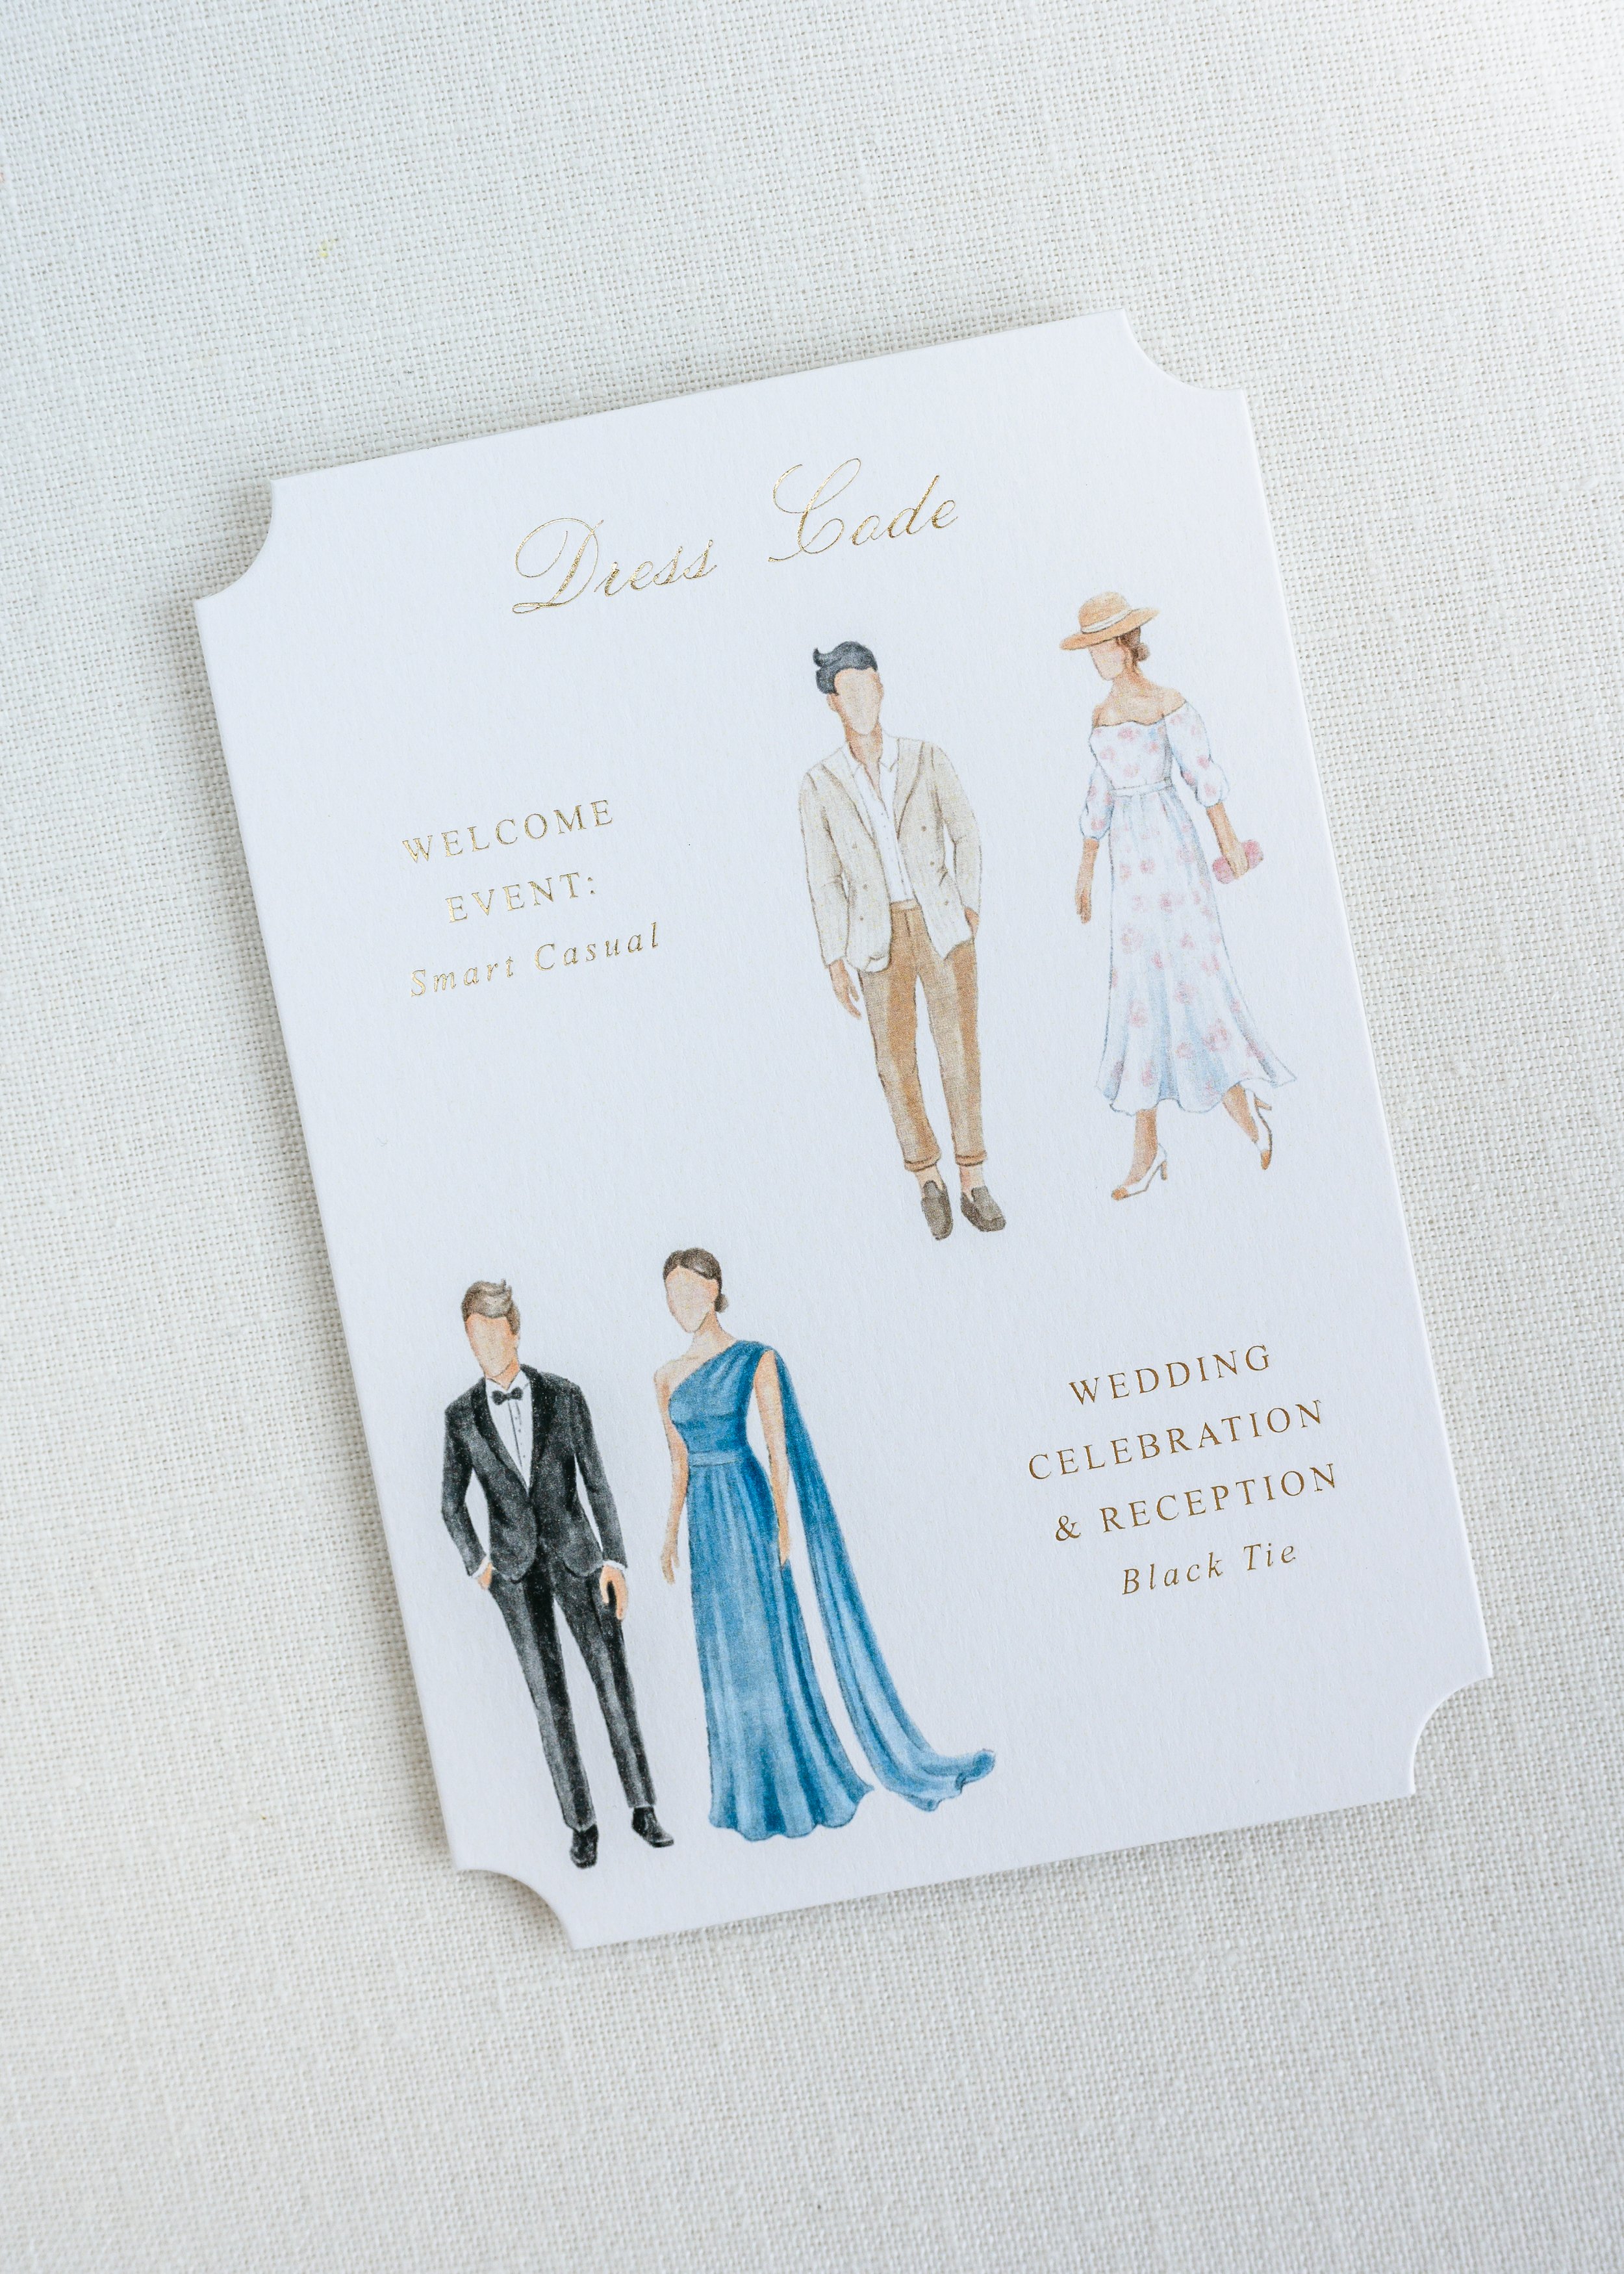 Sample of a Wedding Guest Dress Code Card